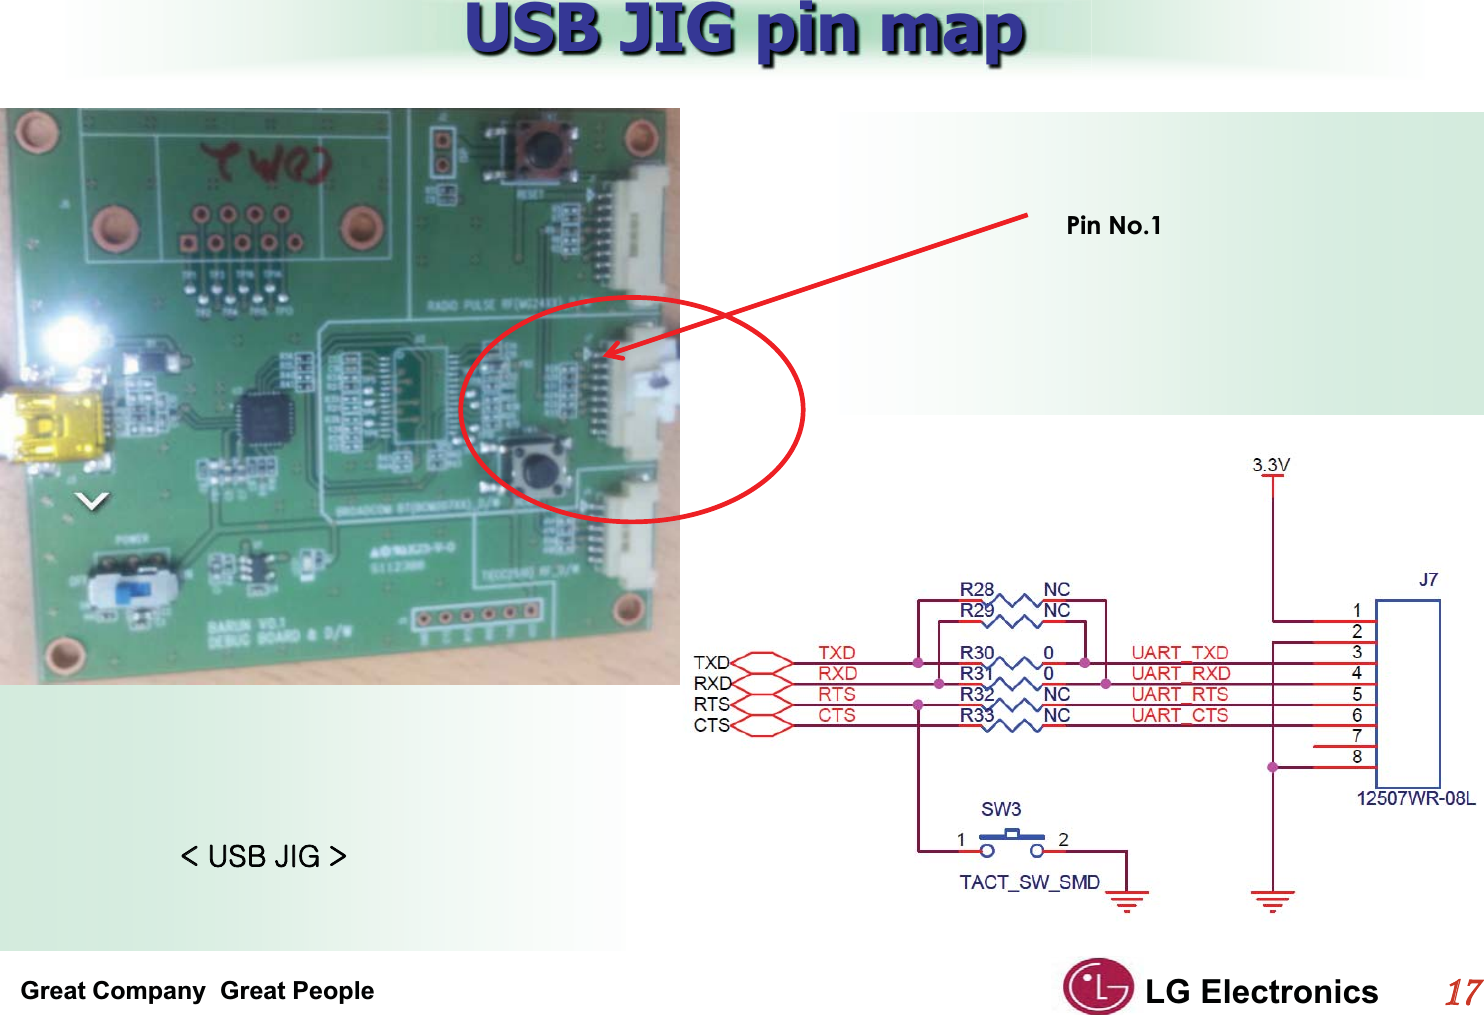 Great Company  Great People LG Electronics117  USB JIG pin mapccG|ziGqpnGeGPin No.1